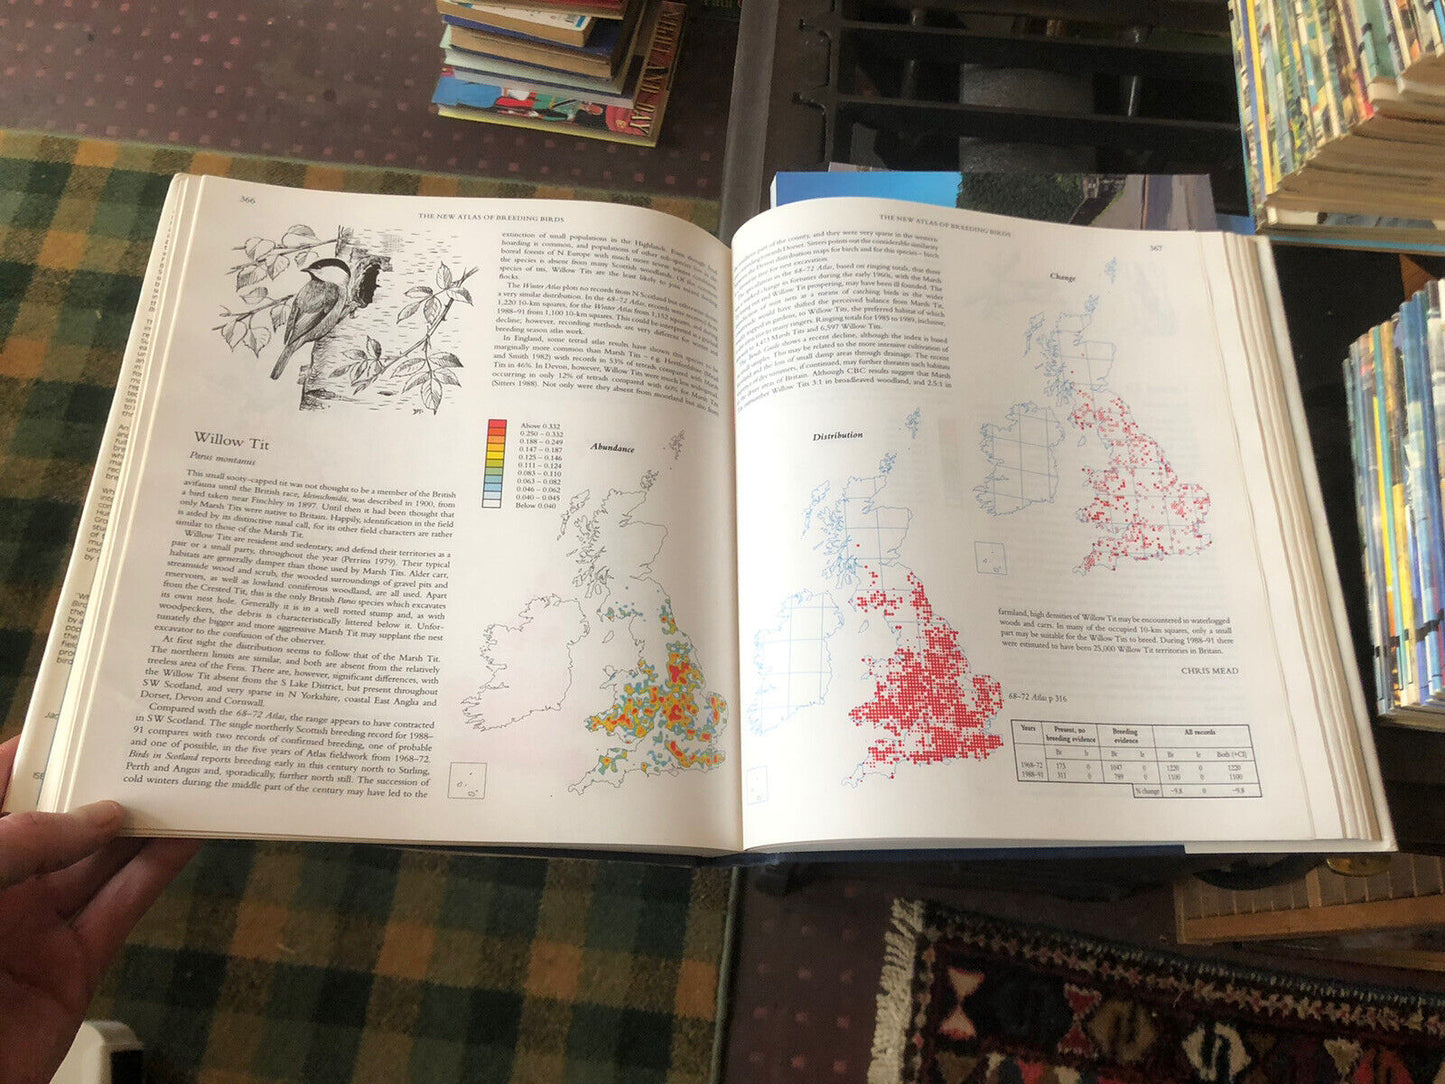 New Atlas of Breeding Birds in Britain and Ireland 1988-1991 : Gibbons &amp; Reid